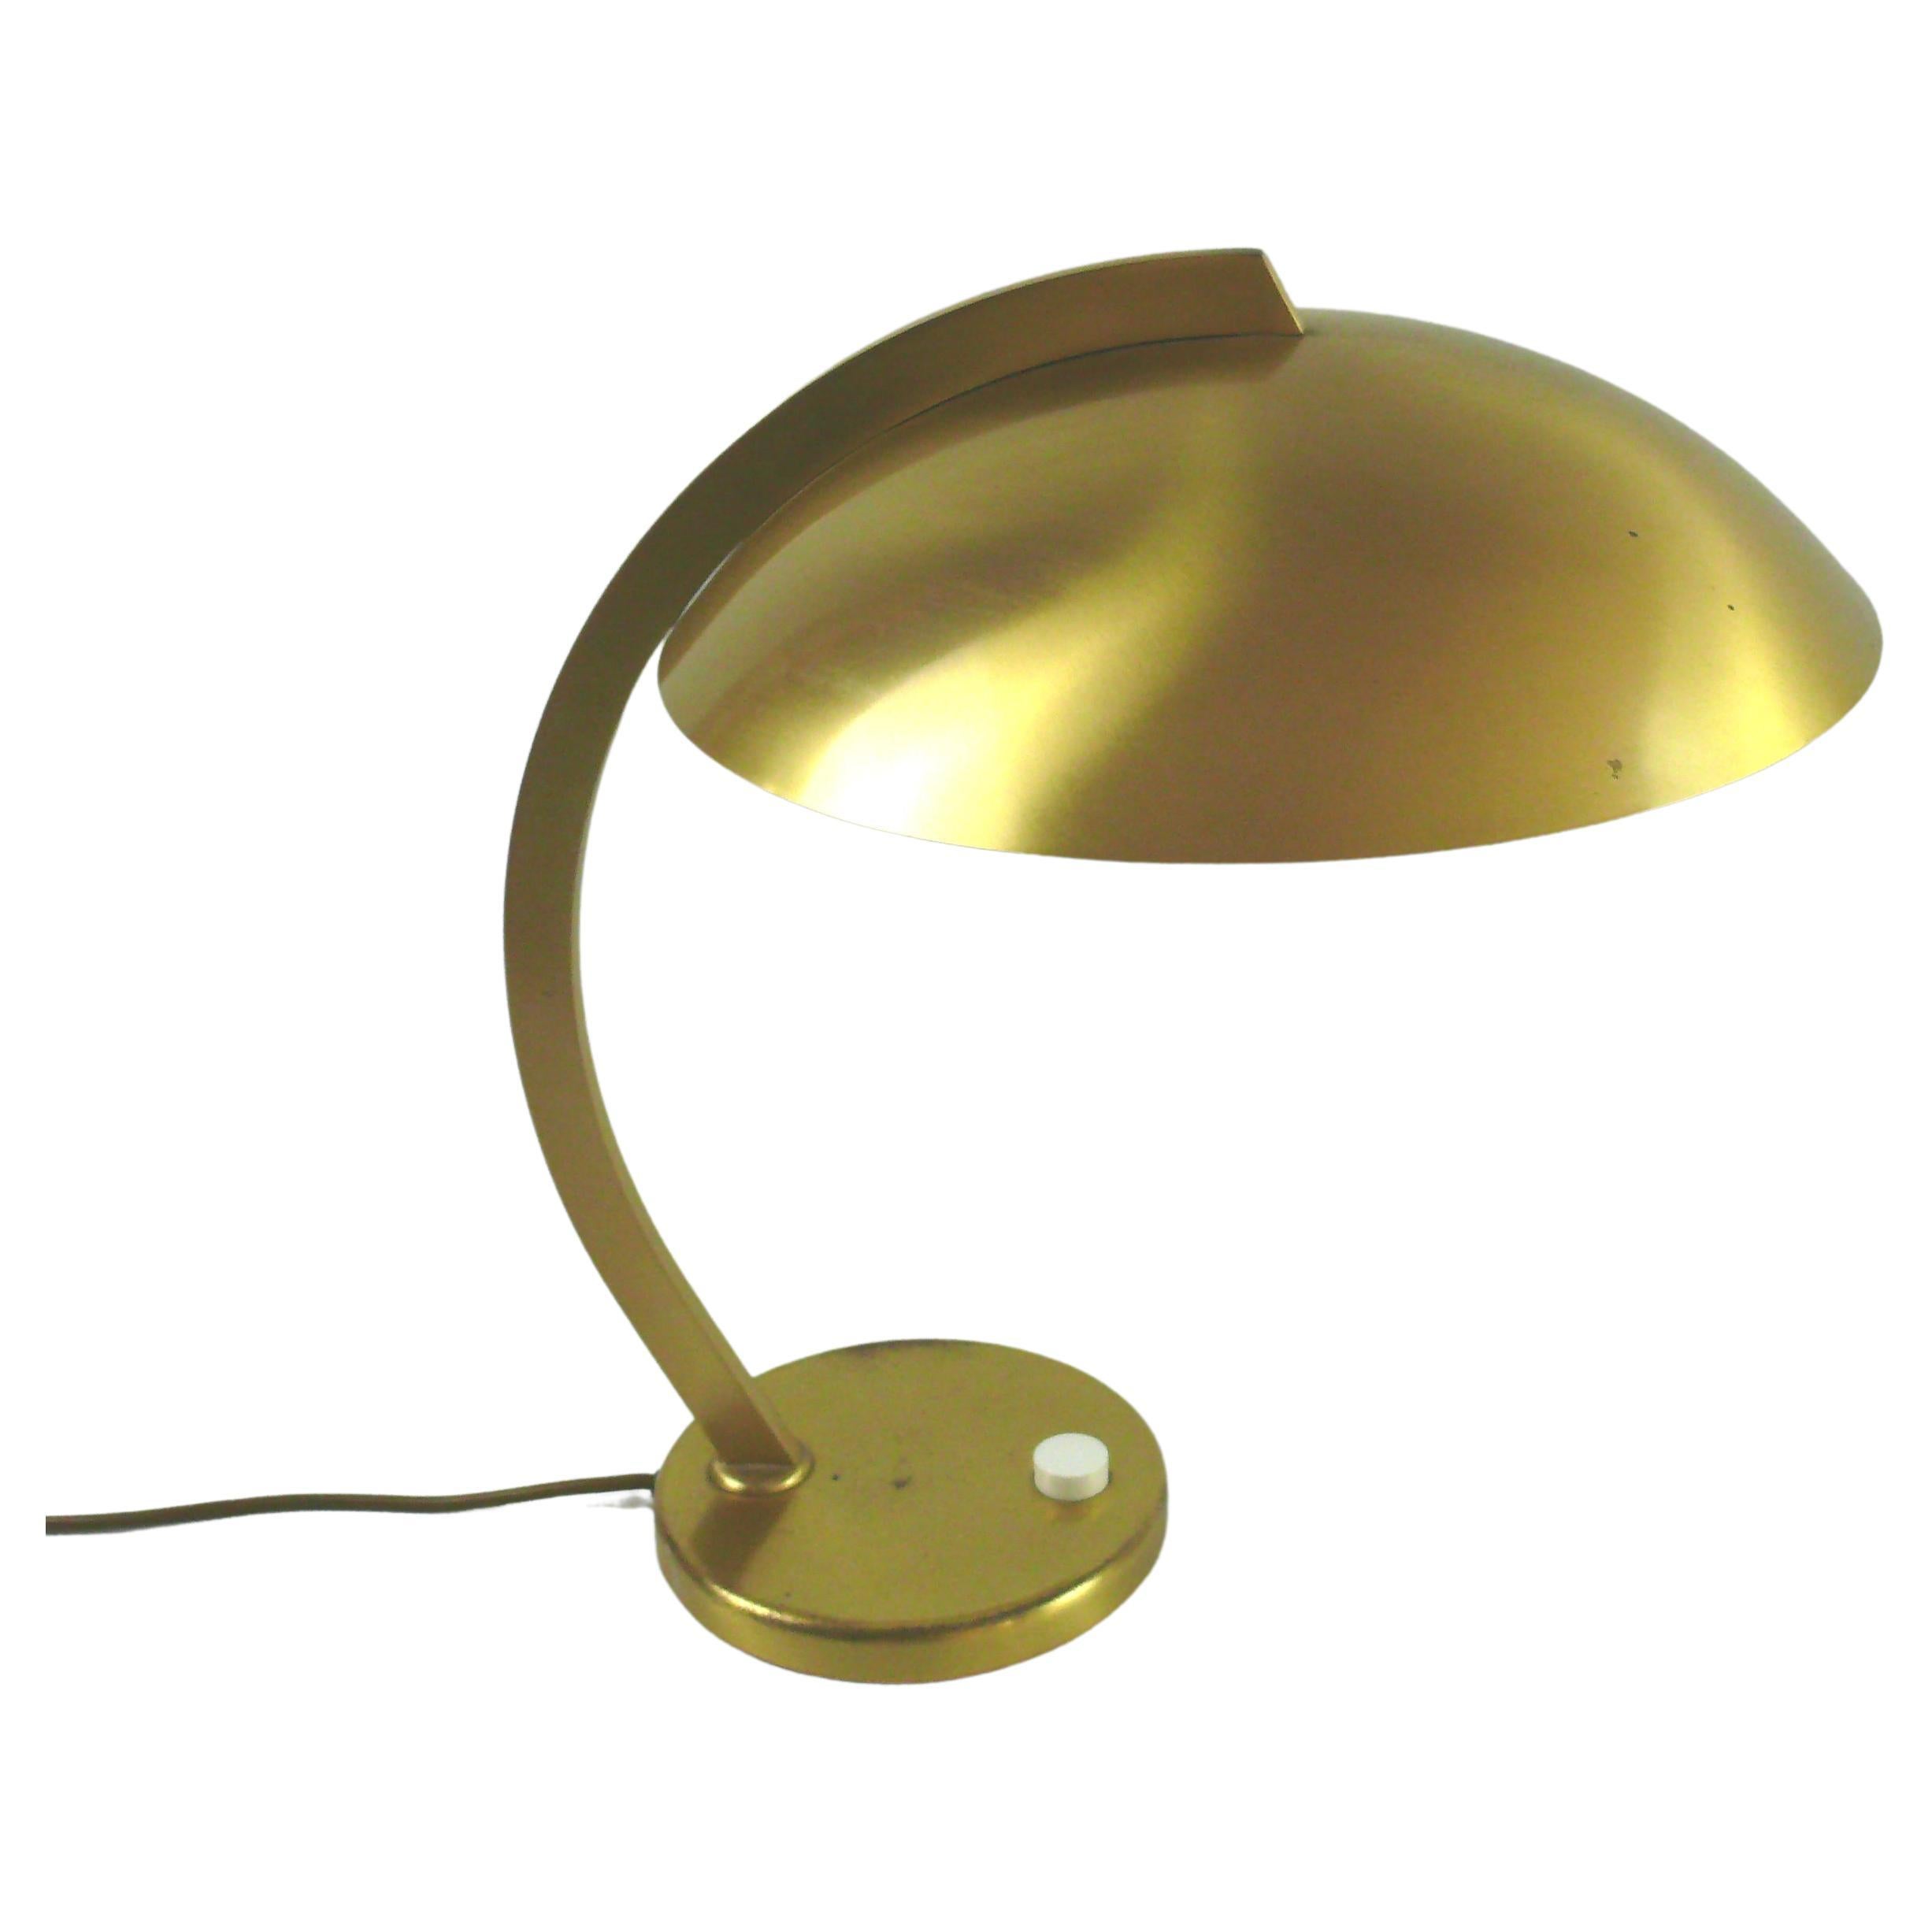 Brass Table Lamp, Desk Lamp, JBS Hillebrand, Germany, 1950s